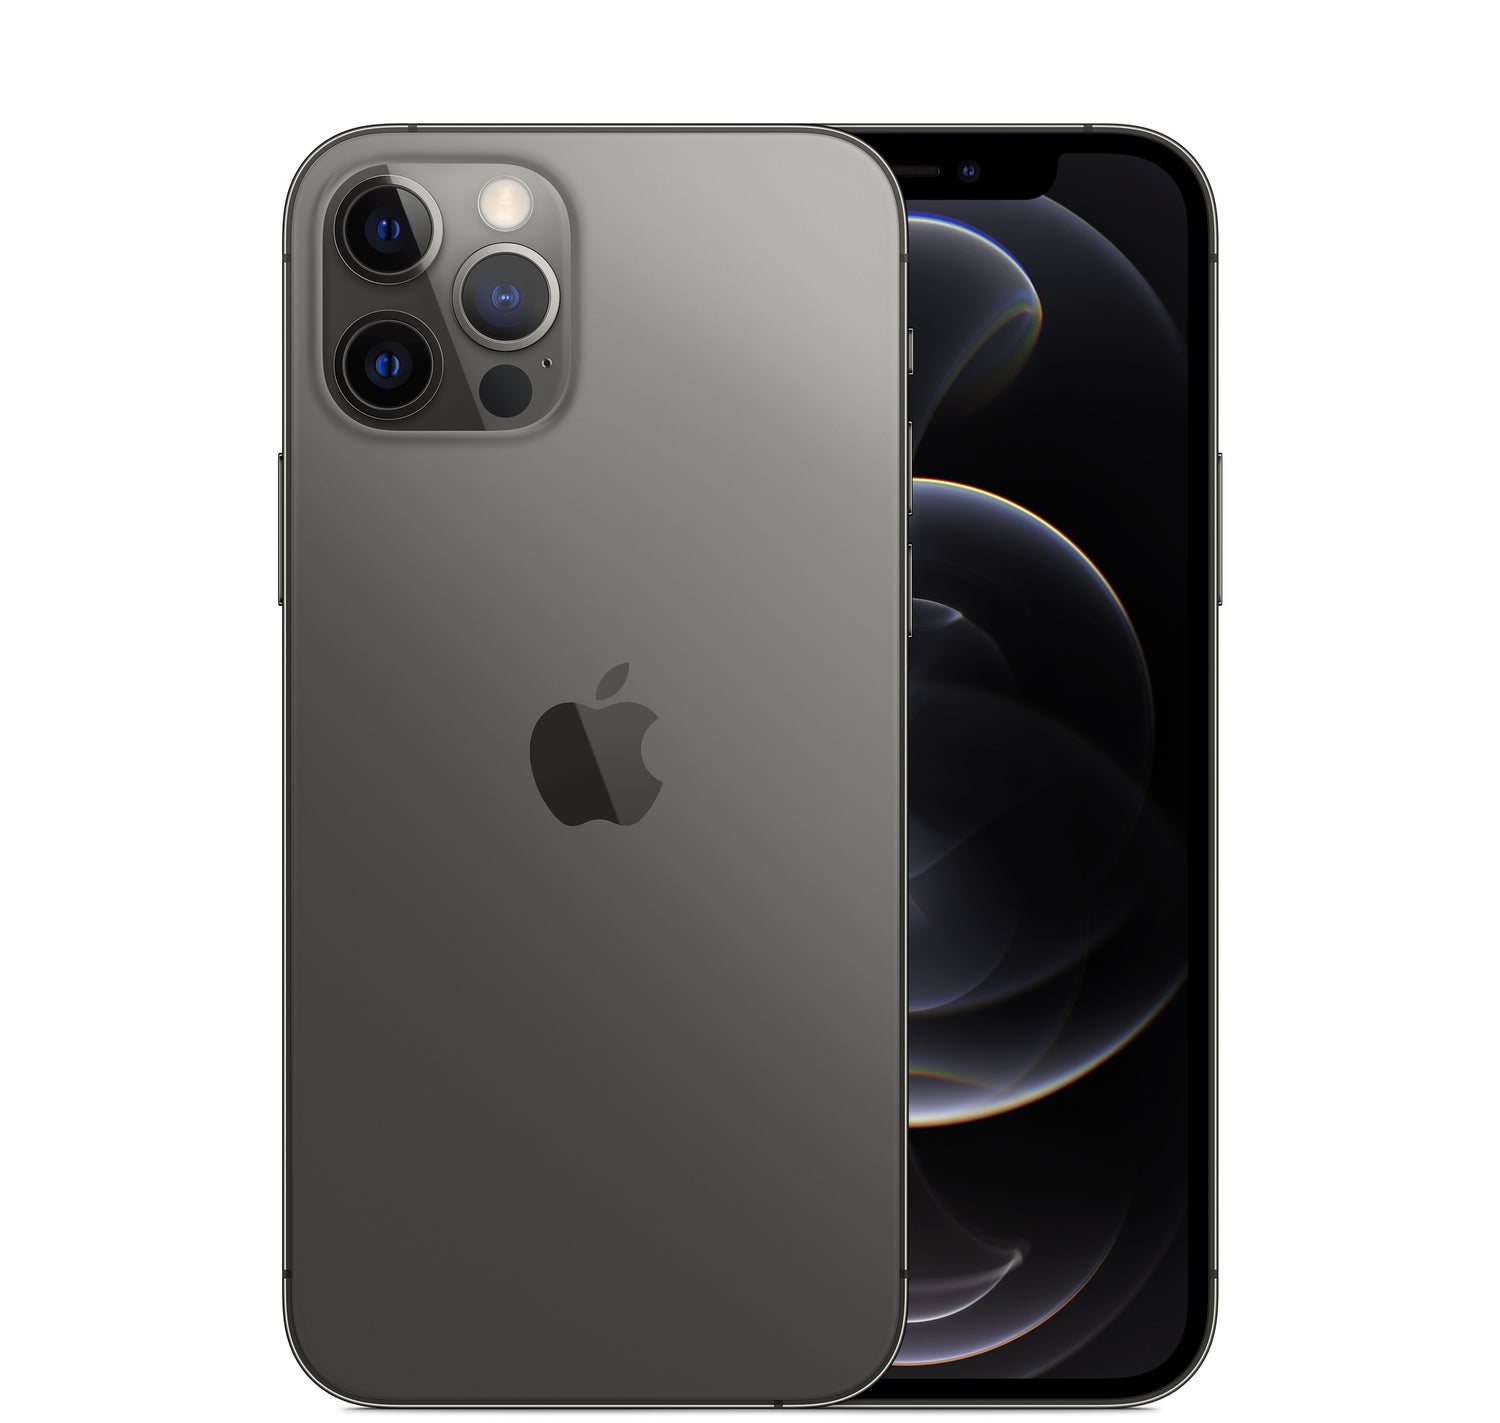 Apple iPhone 12 Pro Max 512GB (Unlocked) - Graphite (Used)